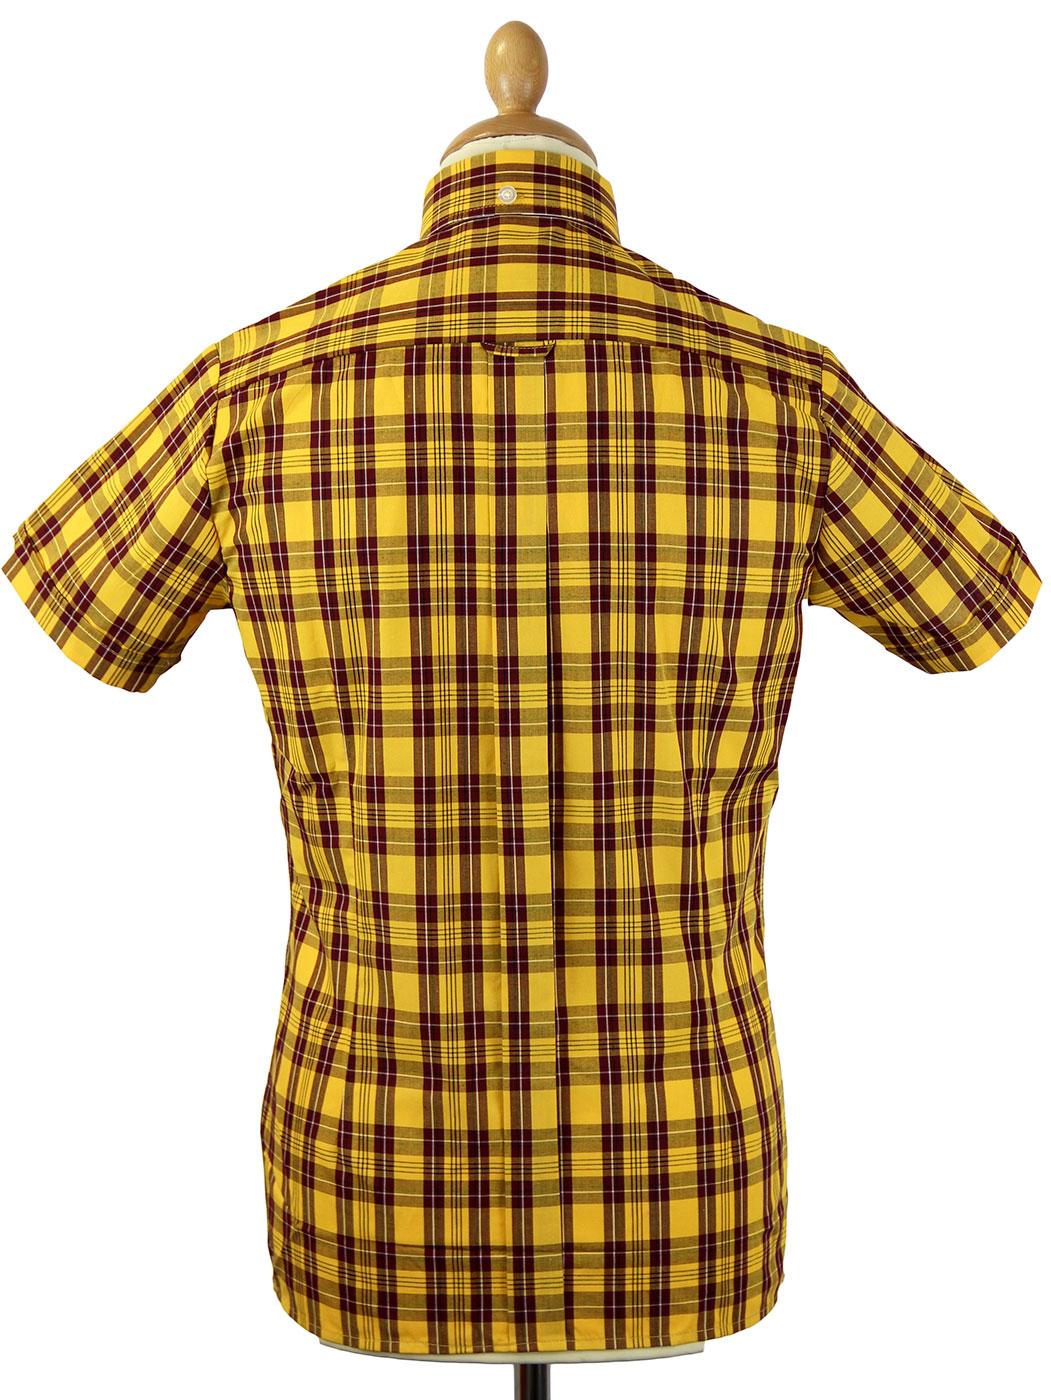 BRUTUS TRIMFIT Dr Martens Mens Retro Mod Tartan Shirt Yellow